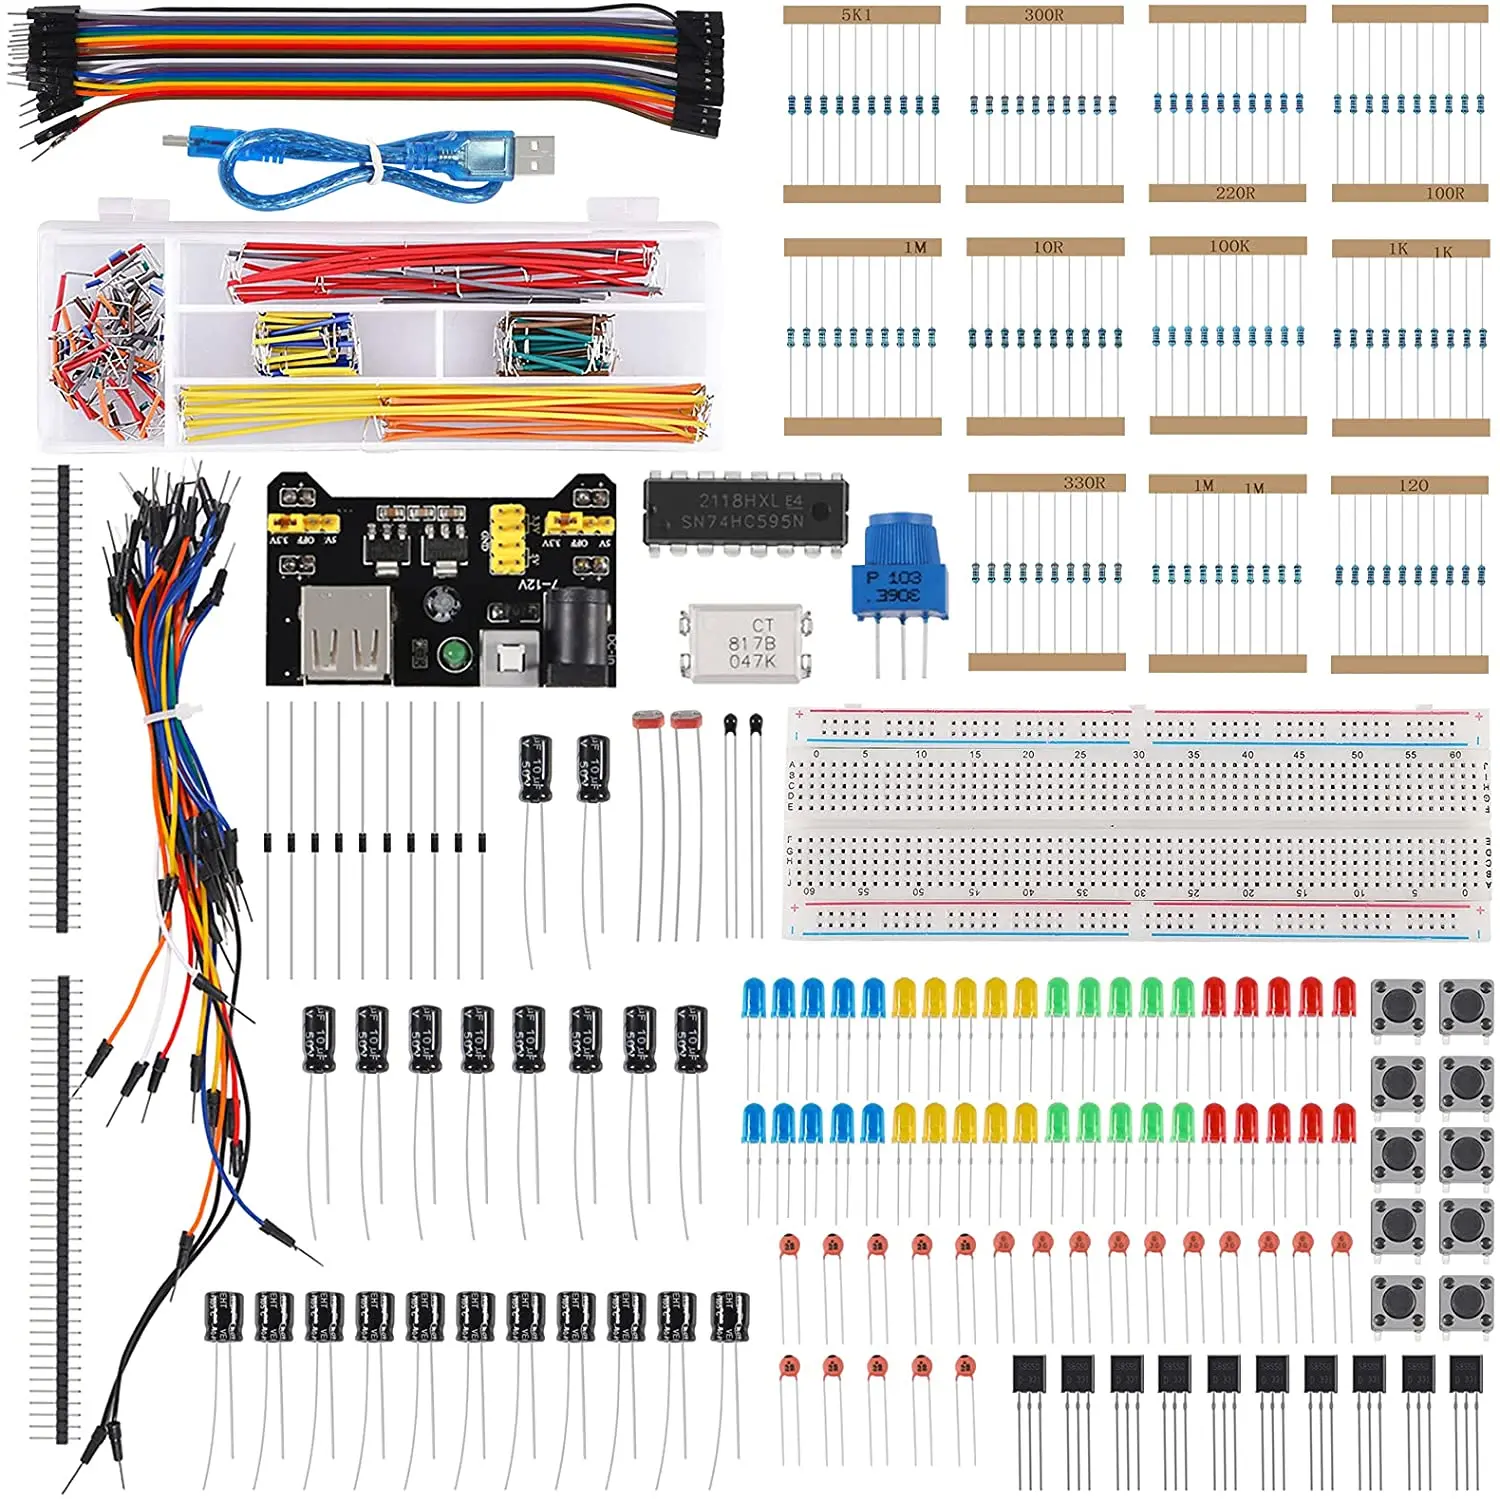 Electronics Component Fun Kit Power Supply Module Jumper Wire 830 Pin Breadboard Precision Potentiometer Resistor for Arduino